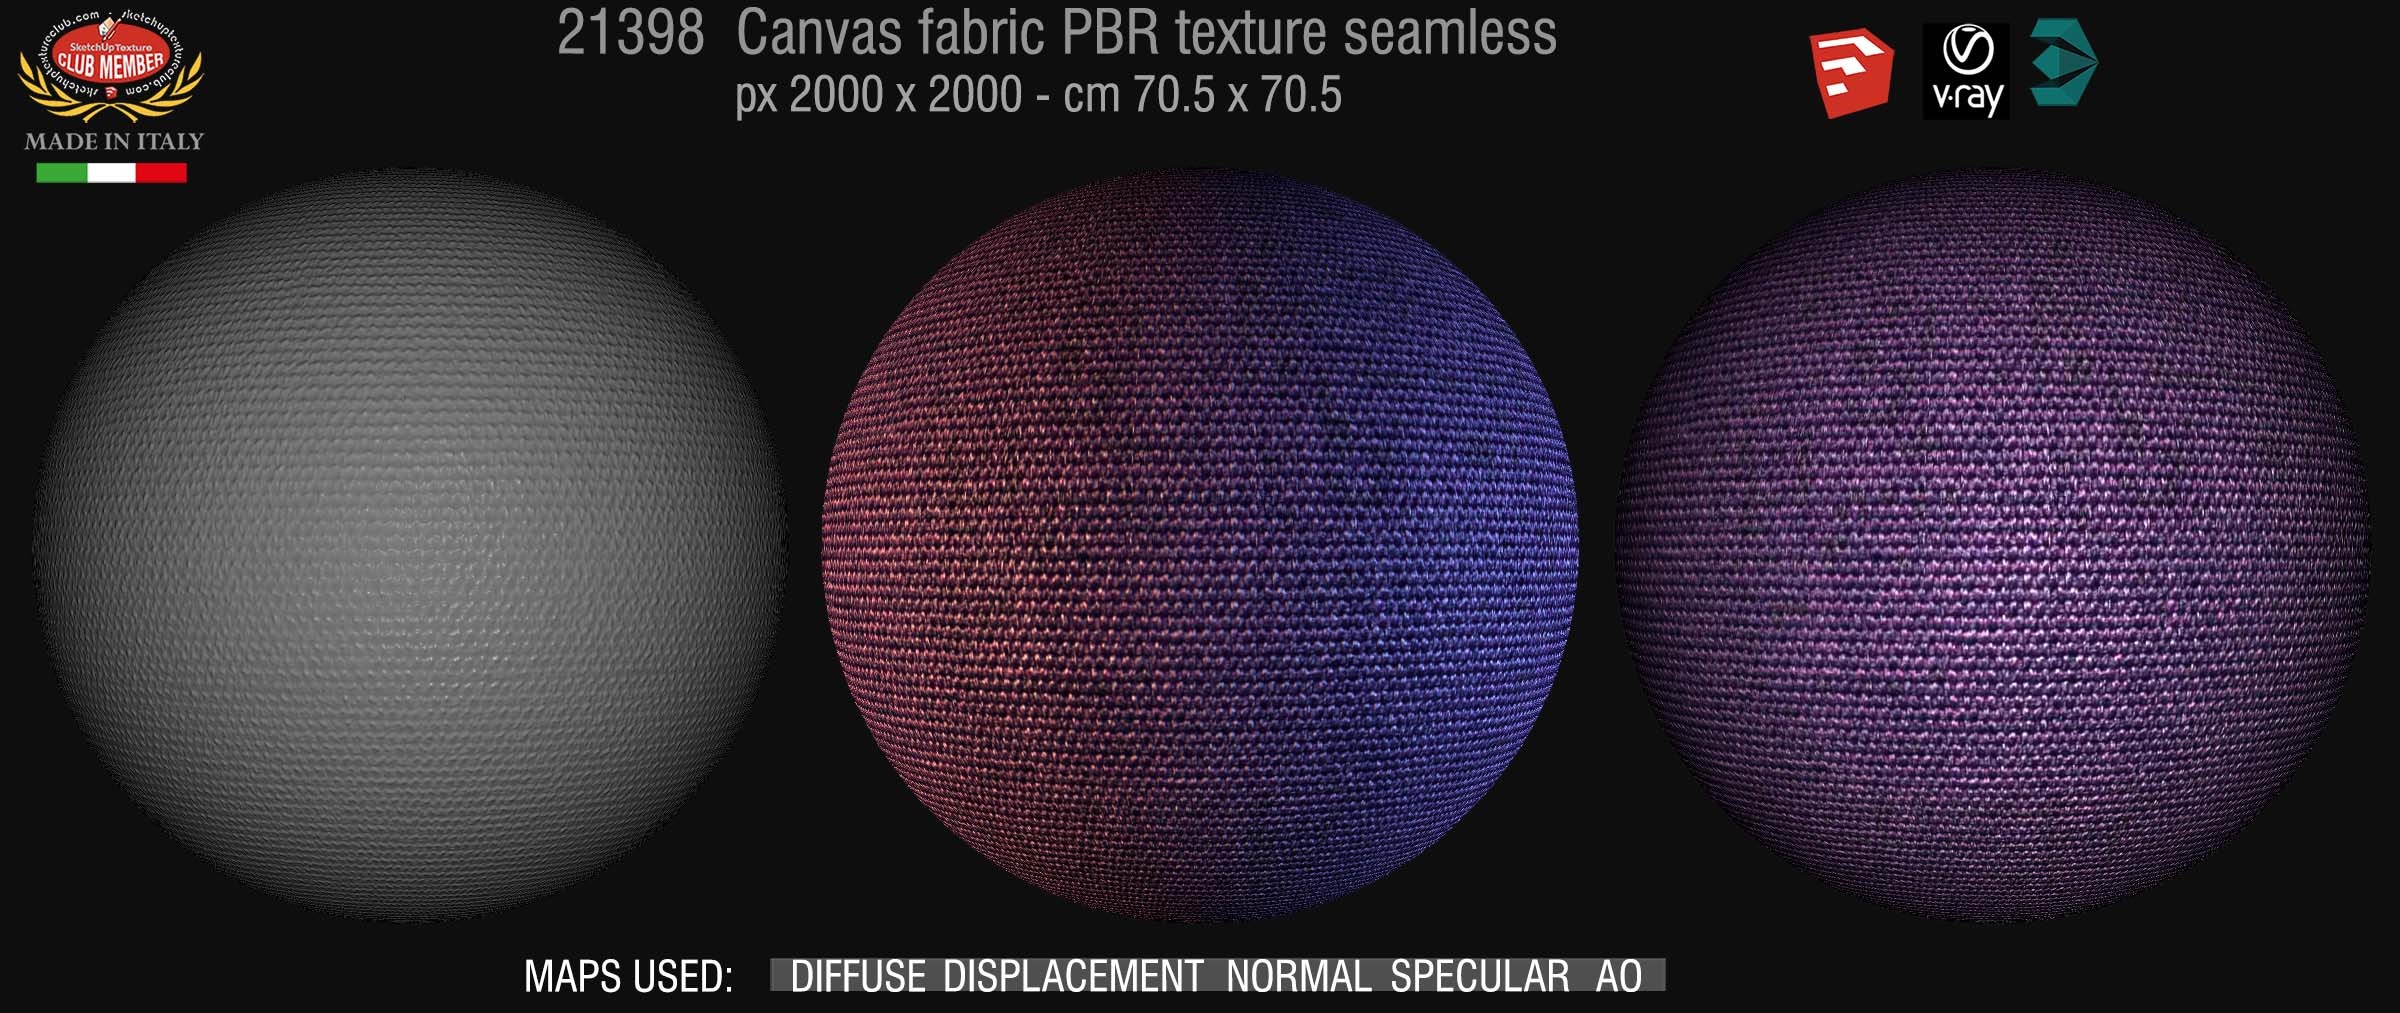 20398 Canvas fabric PBR texture seamless DEMO